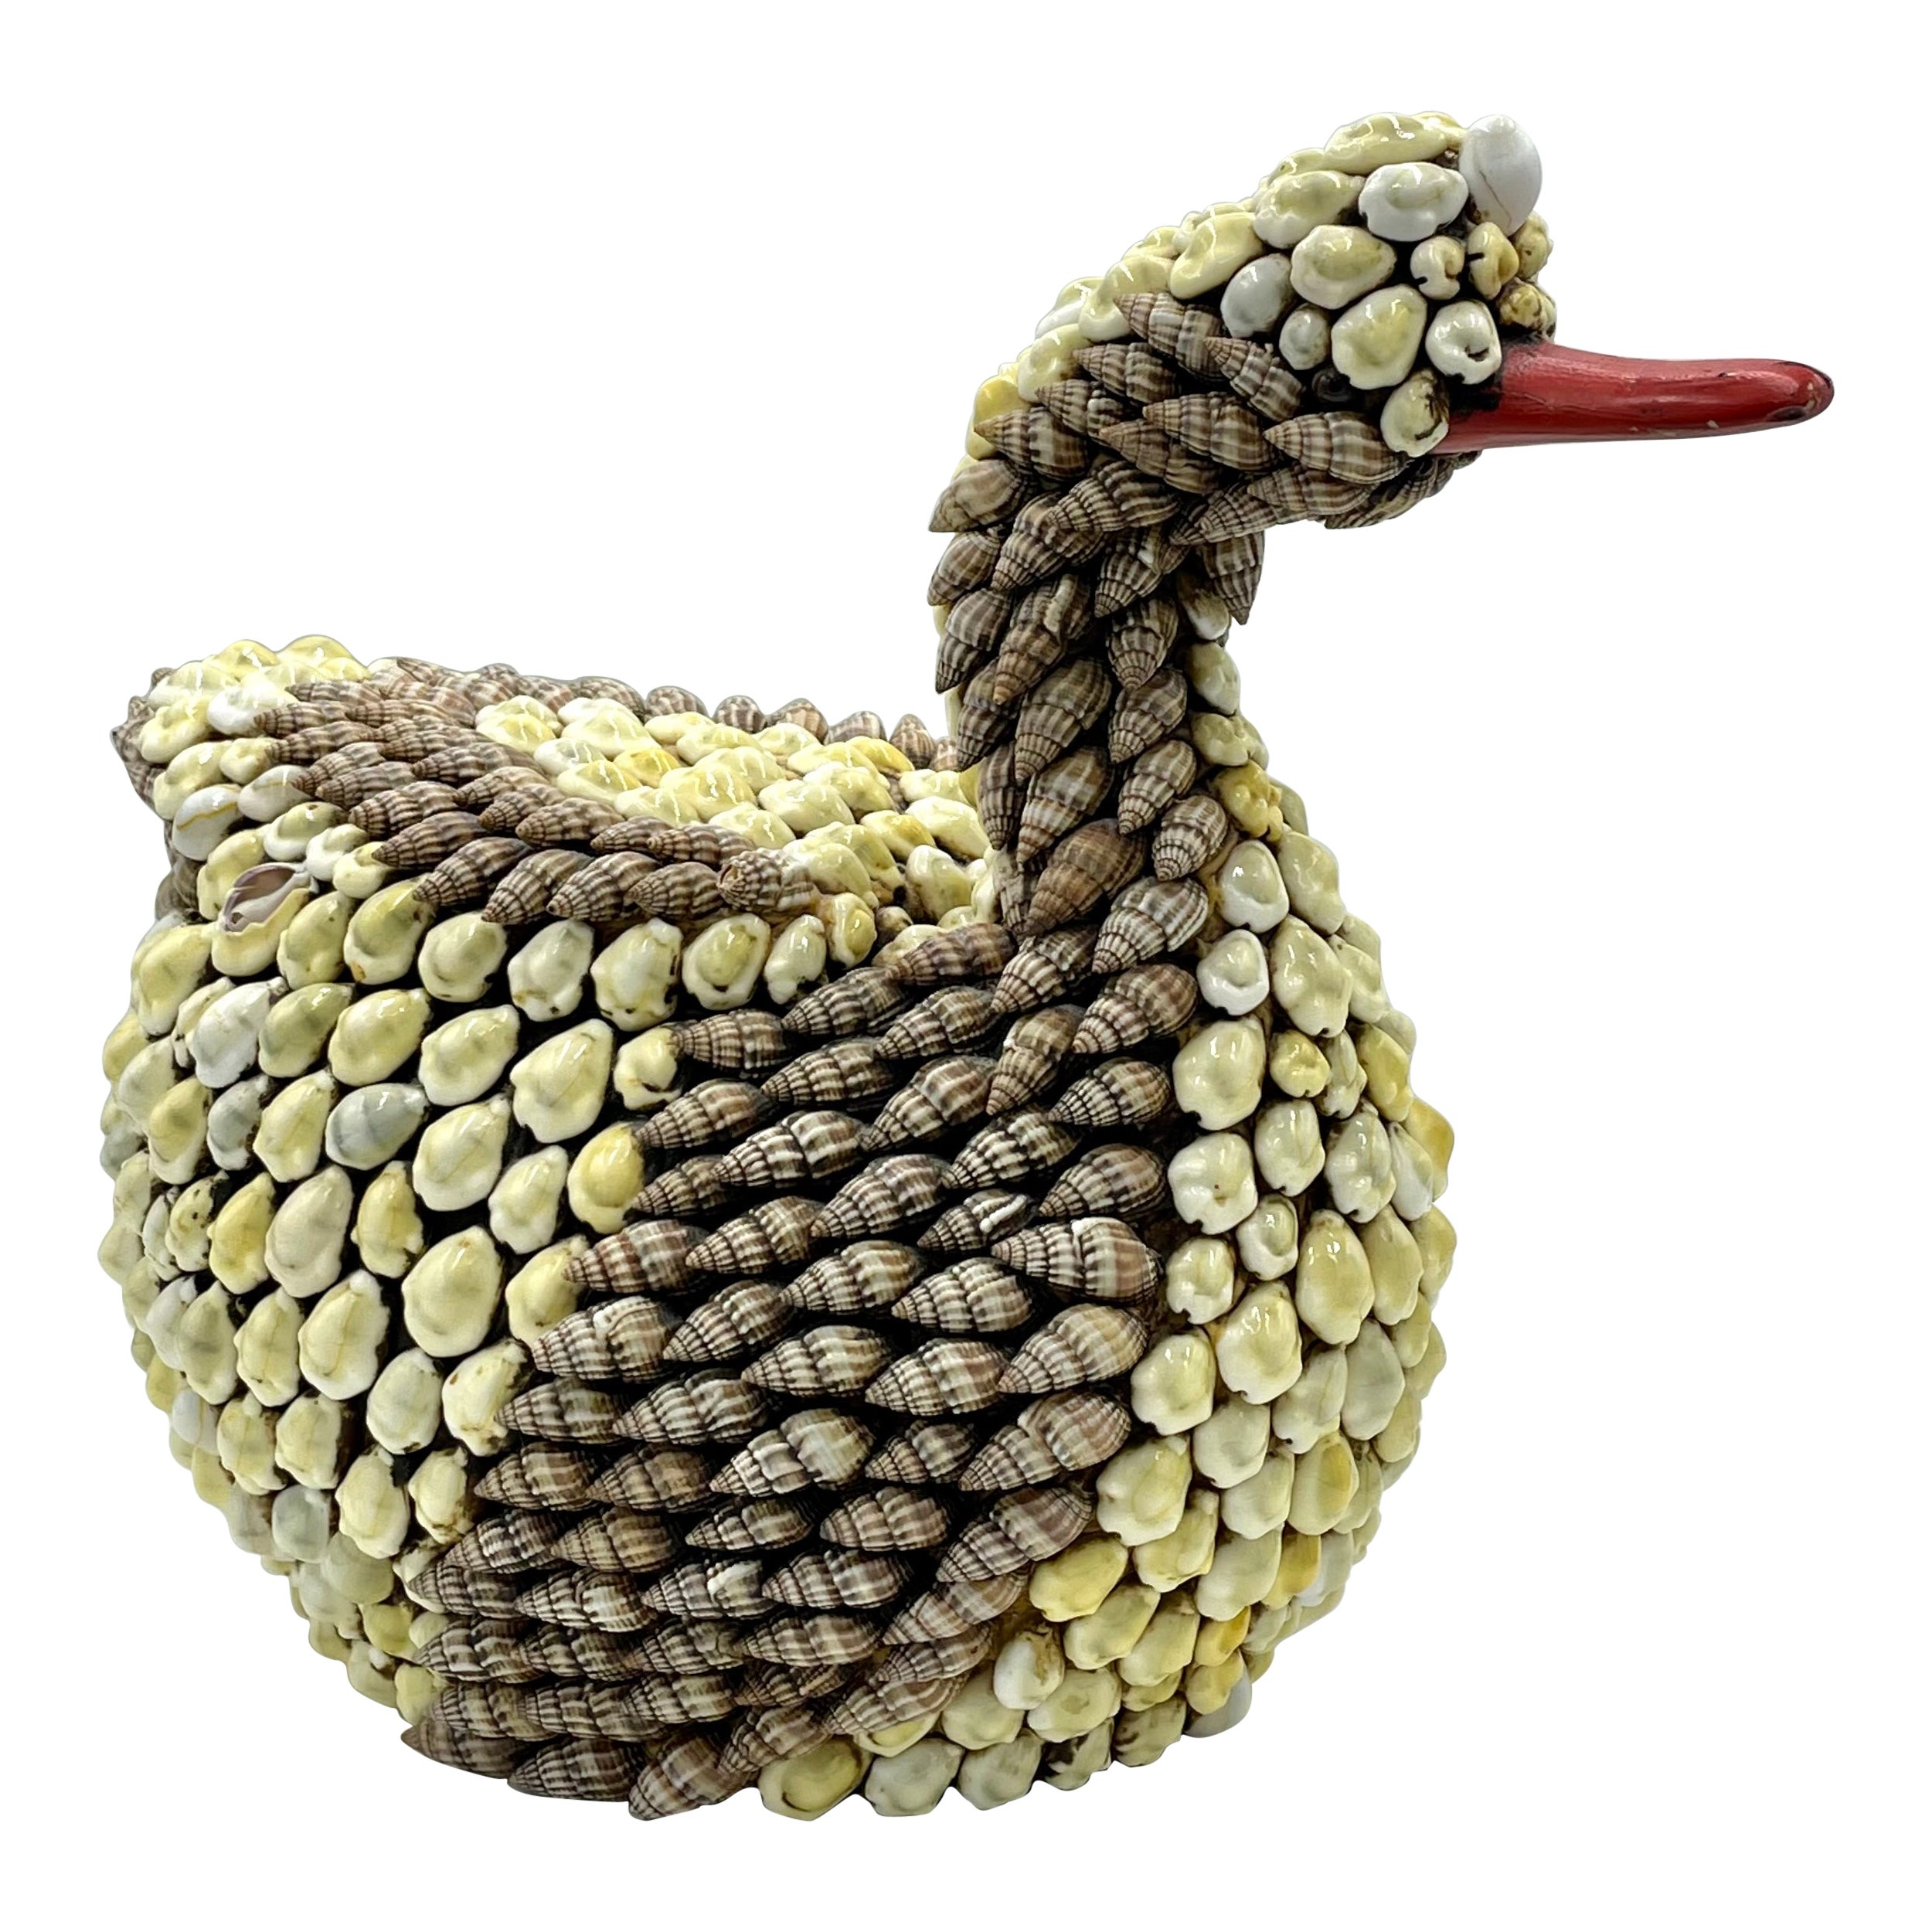 Anthony Redmile Muschel verkrustete Ente oder Swan Box Redmile Objects London England